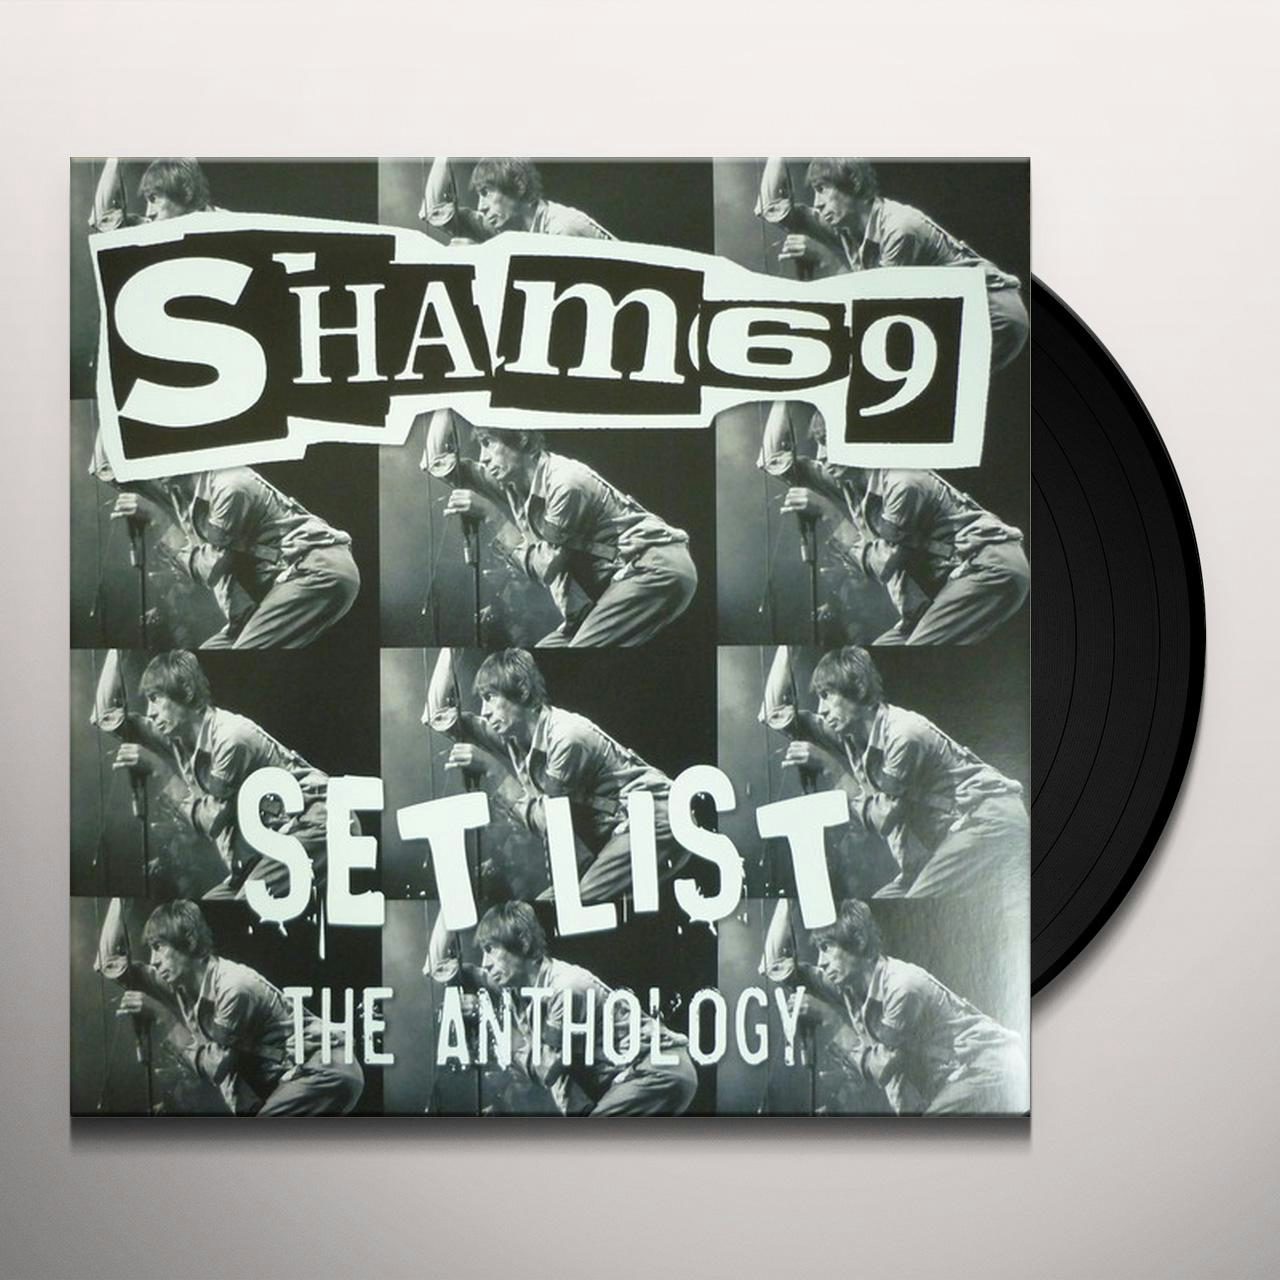 Sham 69 SET LIST Vinyl Record - www.instituteonholisticwealth.com